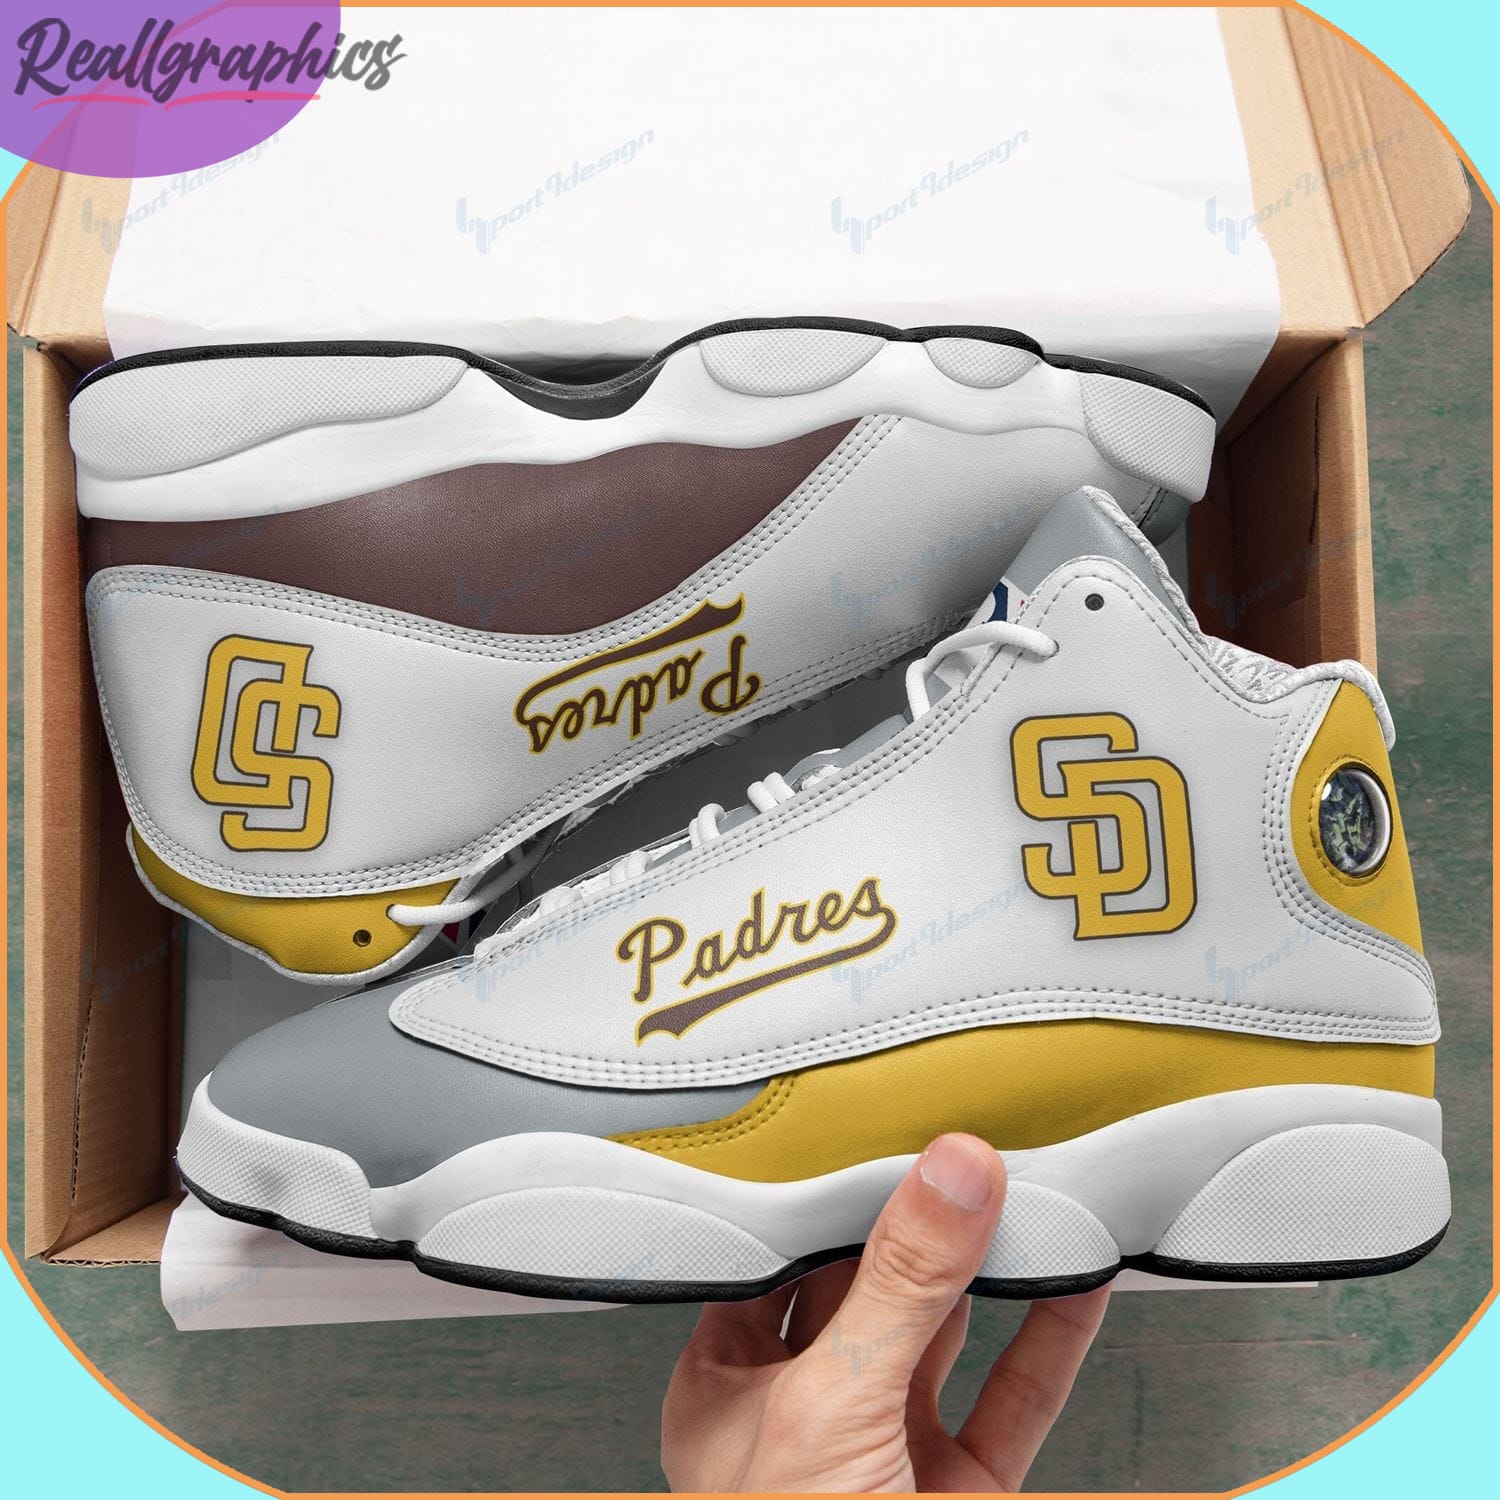 Padres Sneakers 